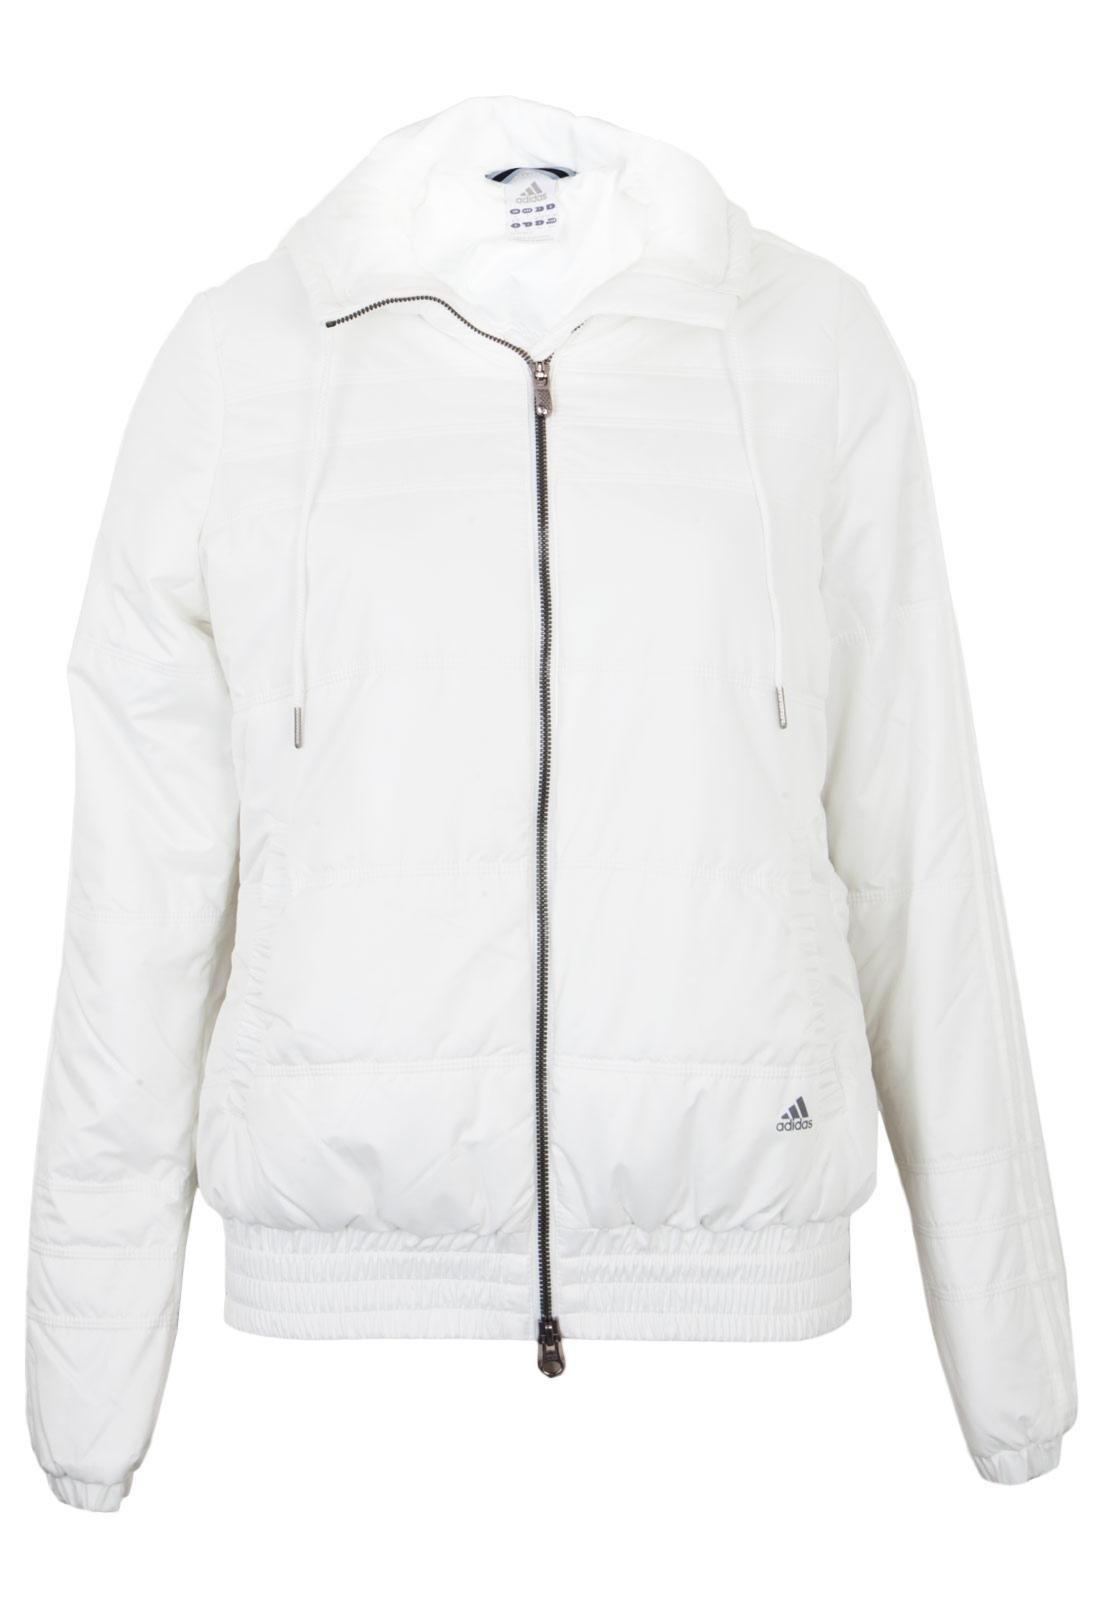 jaqueta adidas feminina branca